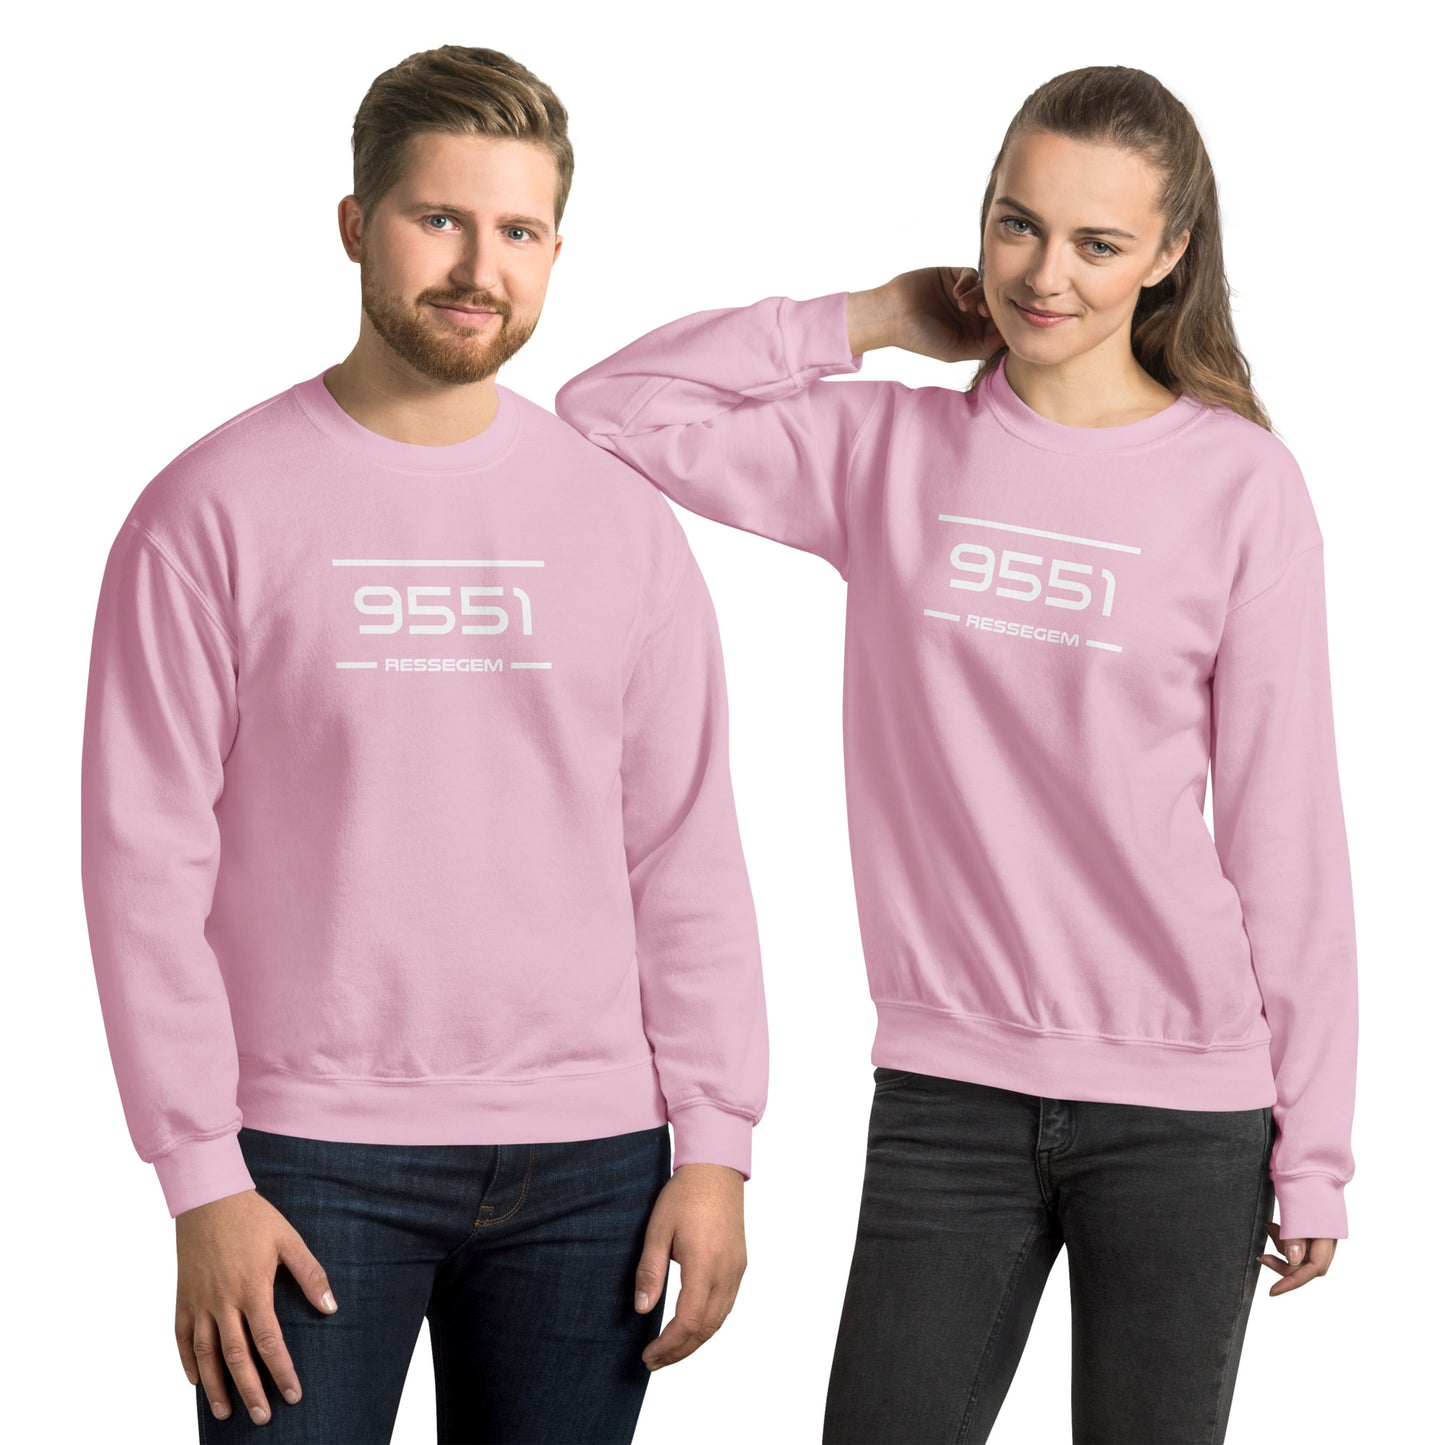 Sweater - 9551 - Ressegem (M/V)